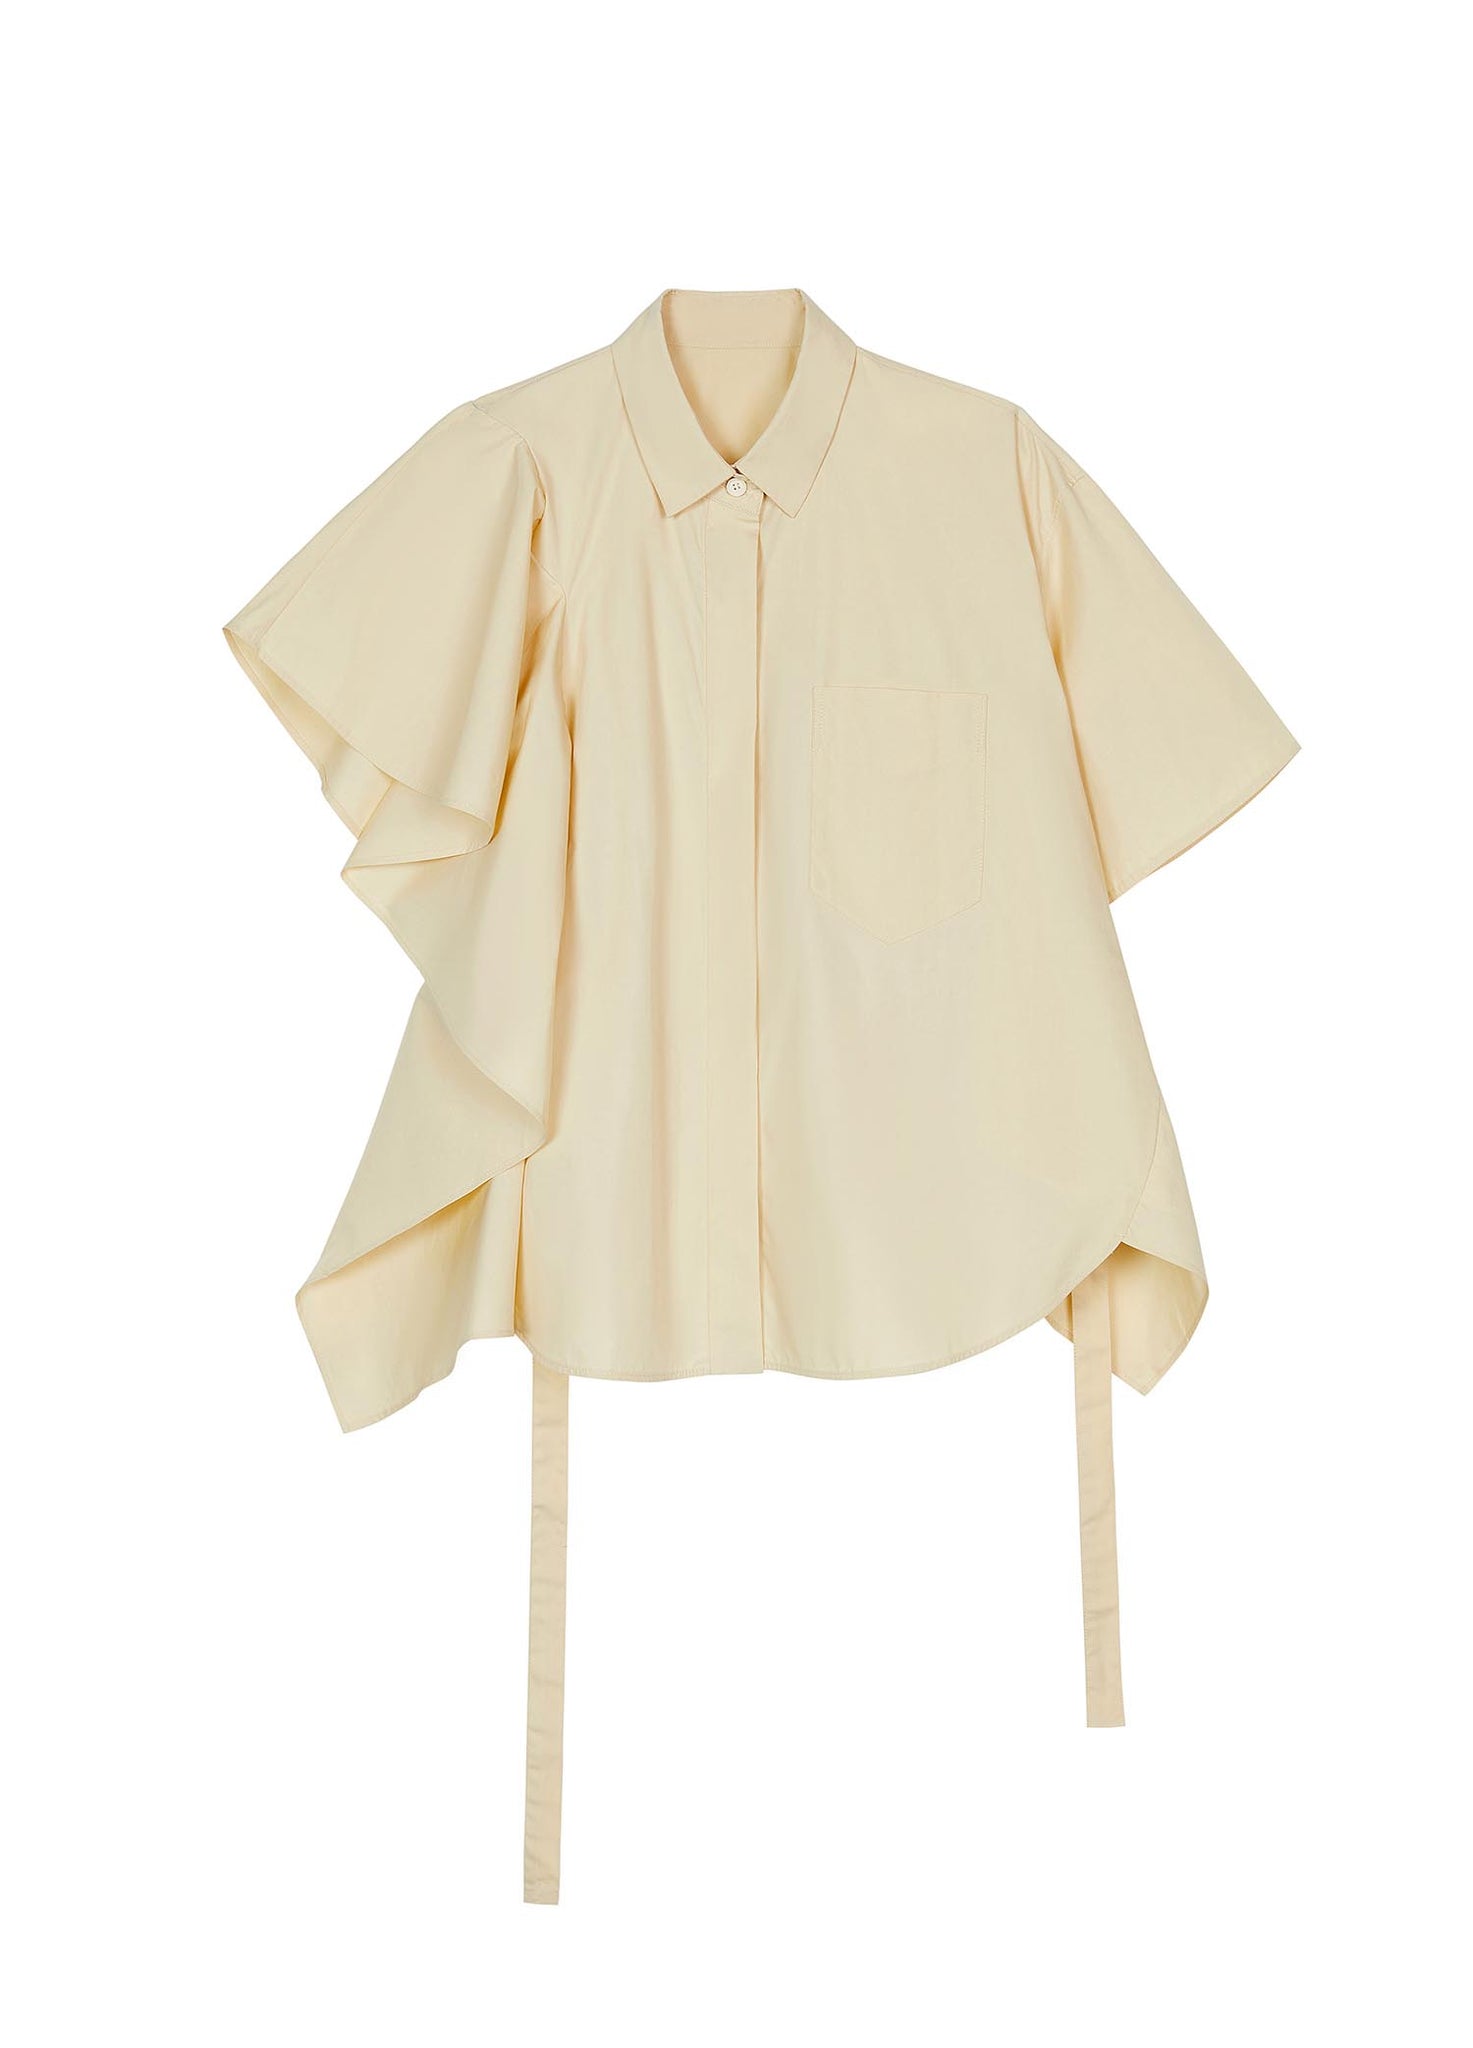 Shirt / JNBY Solid Asymmetric Short Sleeve Shirt (100% Cotton)